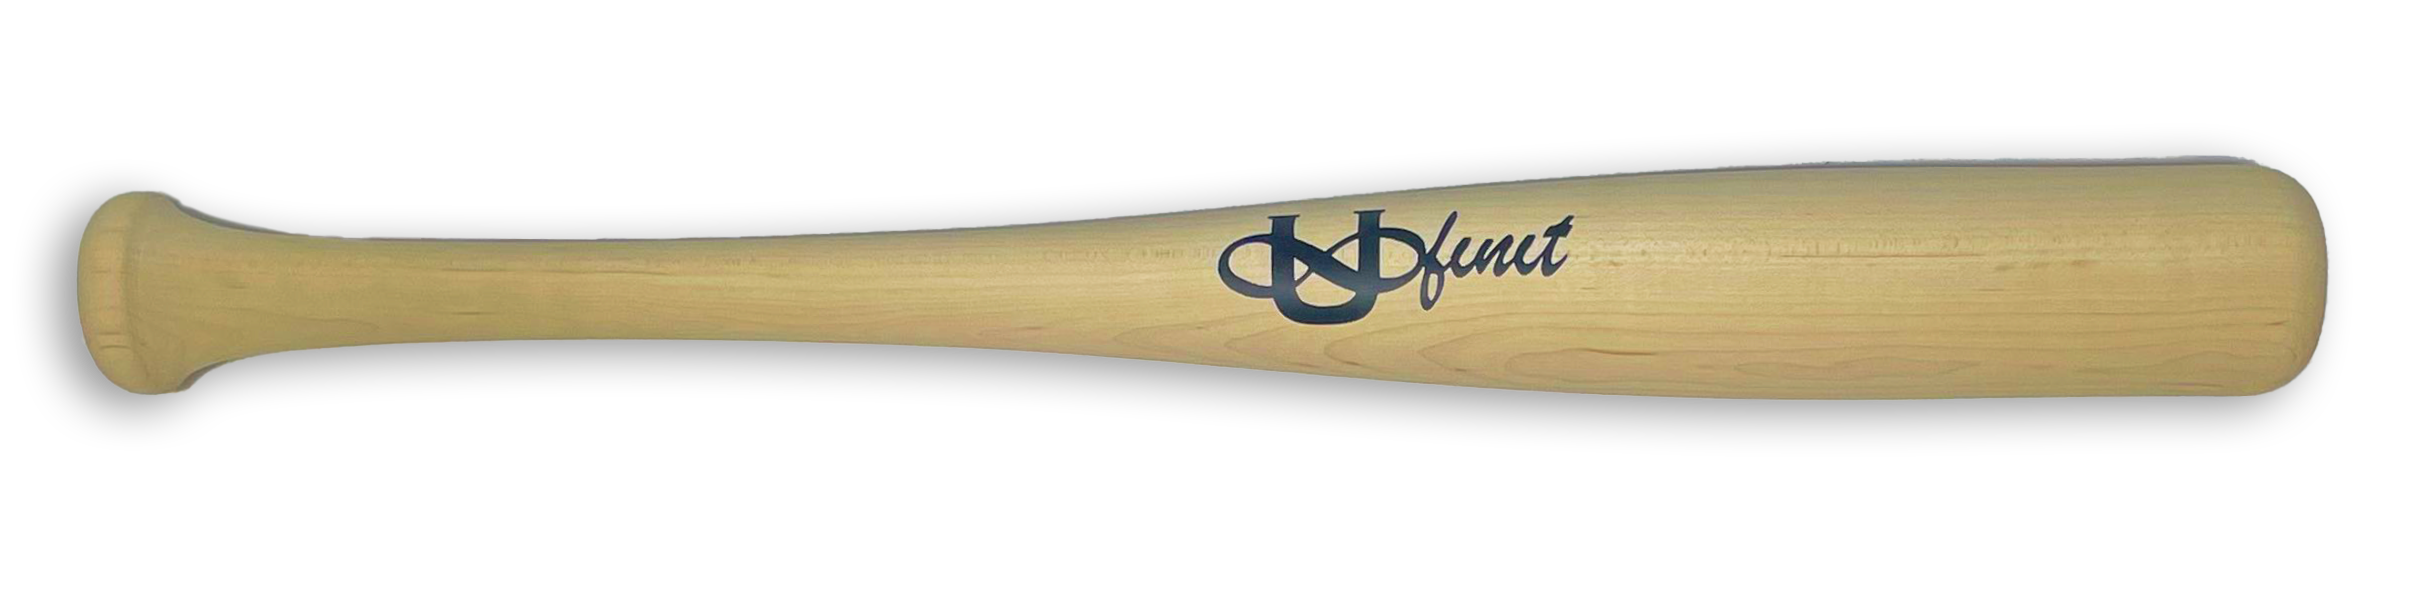 One-Handed Training Bat - Custom Wood Baseball Bats | Ufinit®